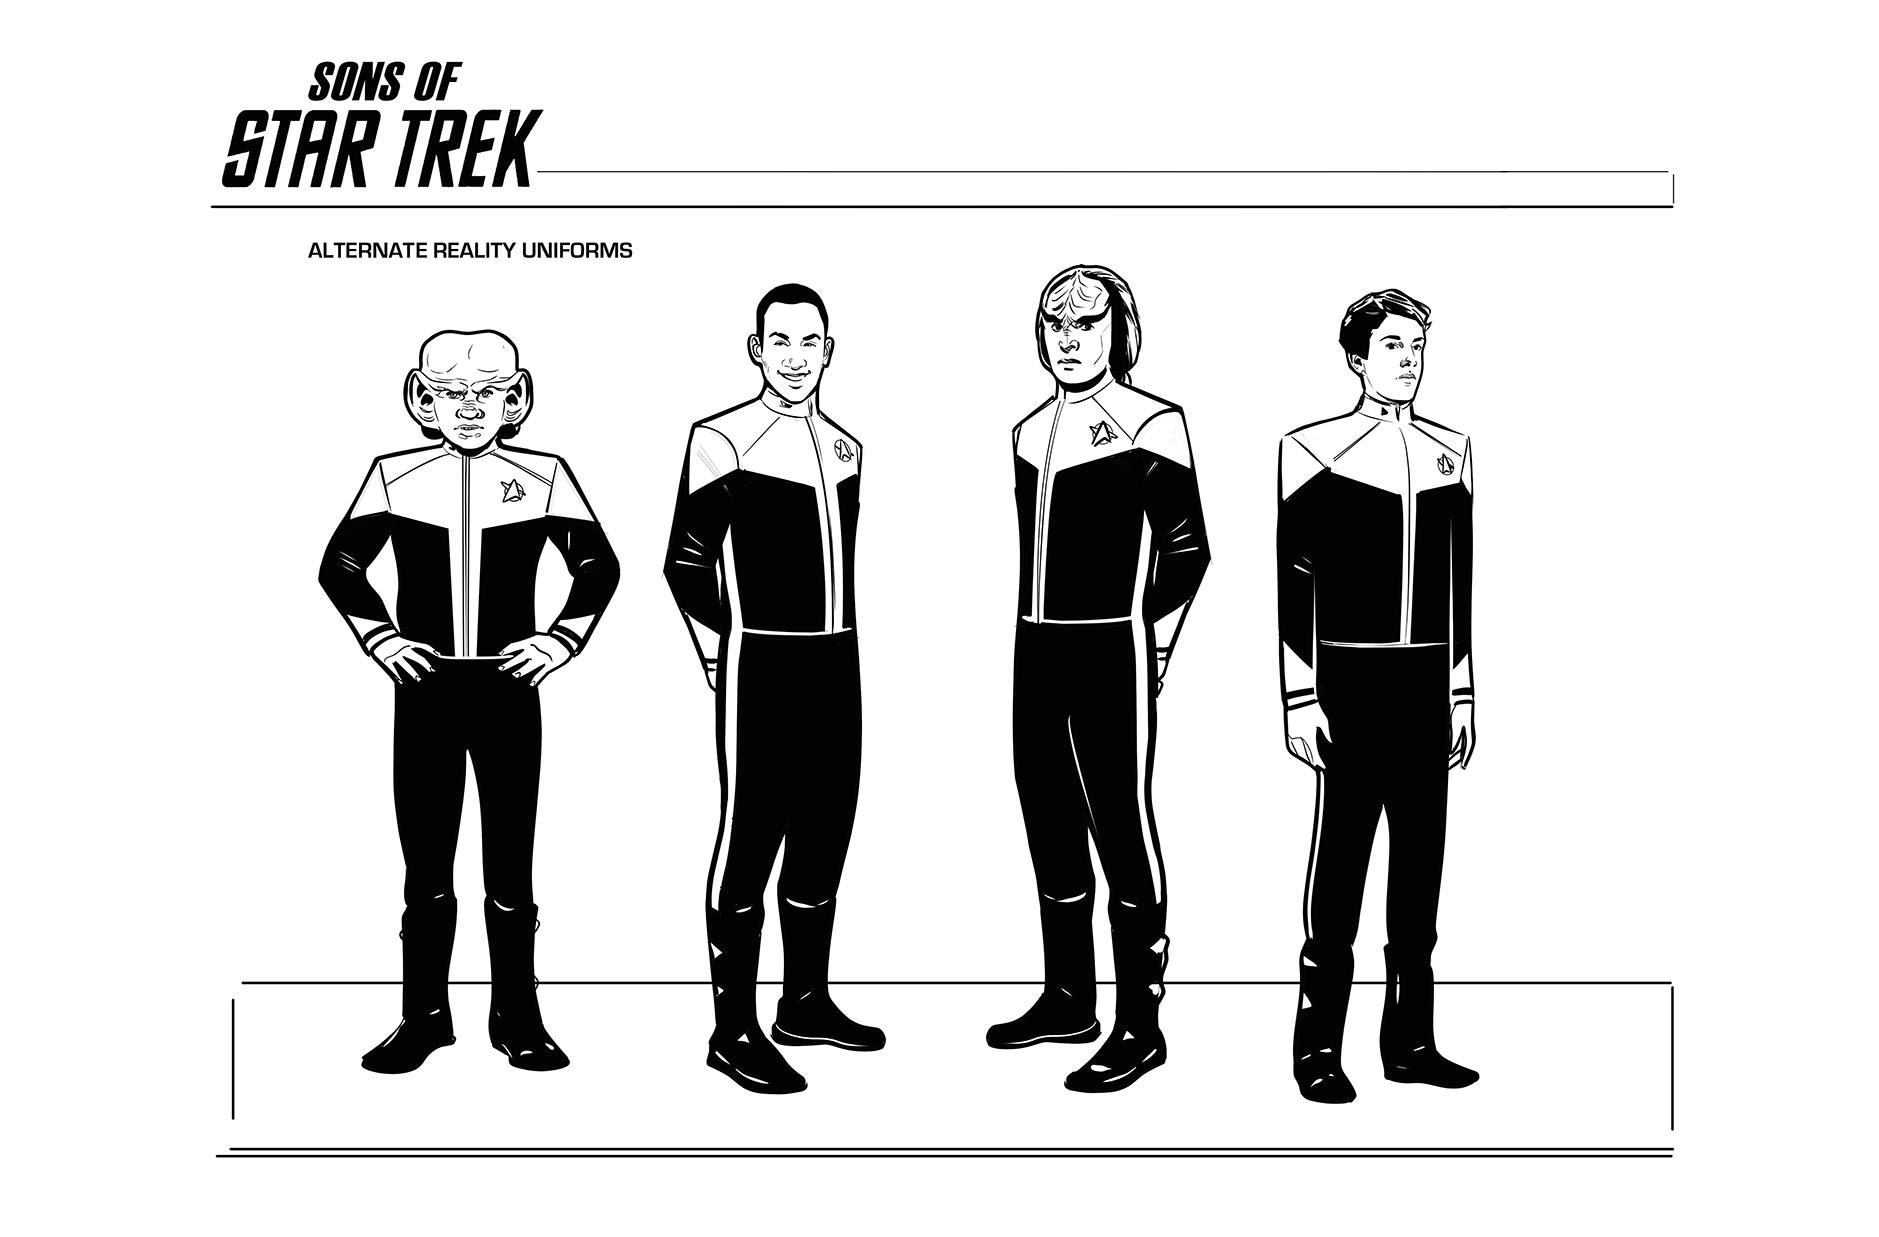 Star Trek: Sons of Star Trek character designs of alternate reality uniforms for Jake Sisko, Nog, Alexander Rozhenko, and Q Junior